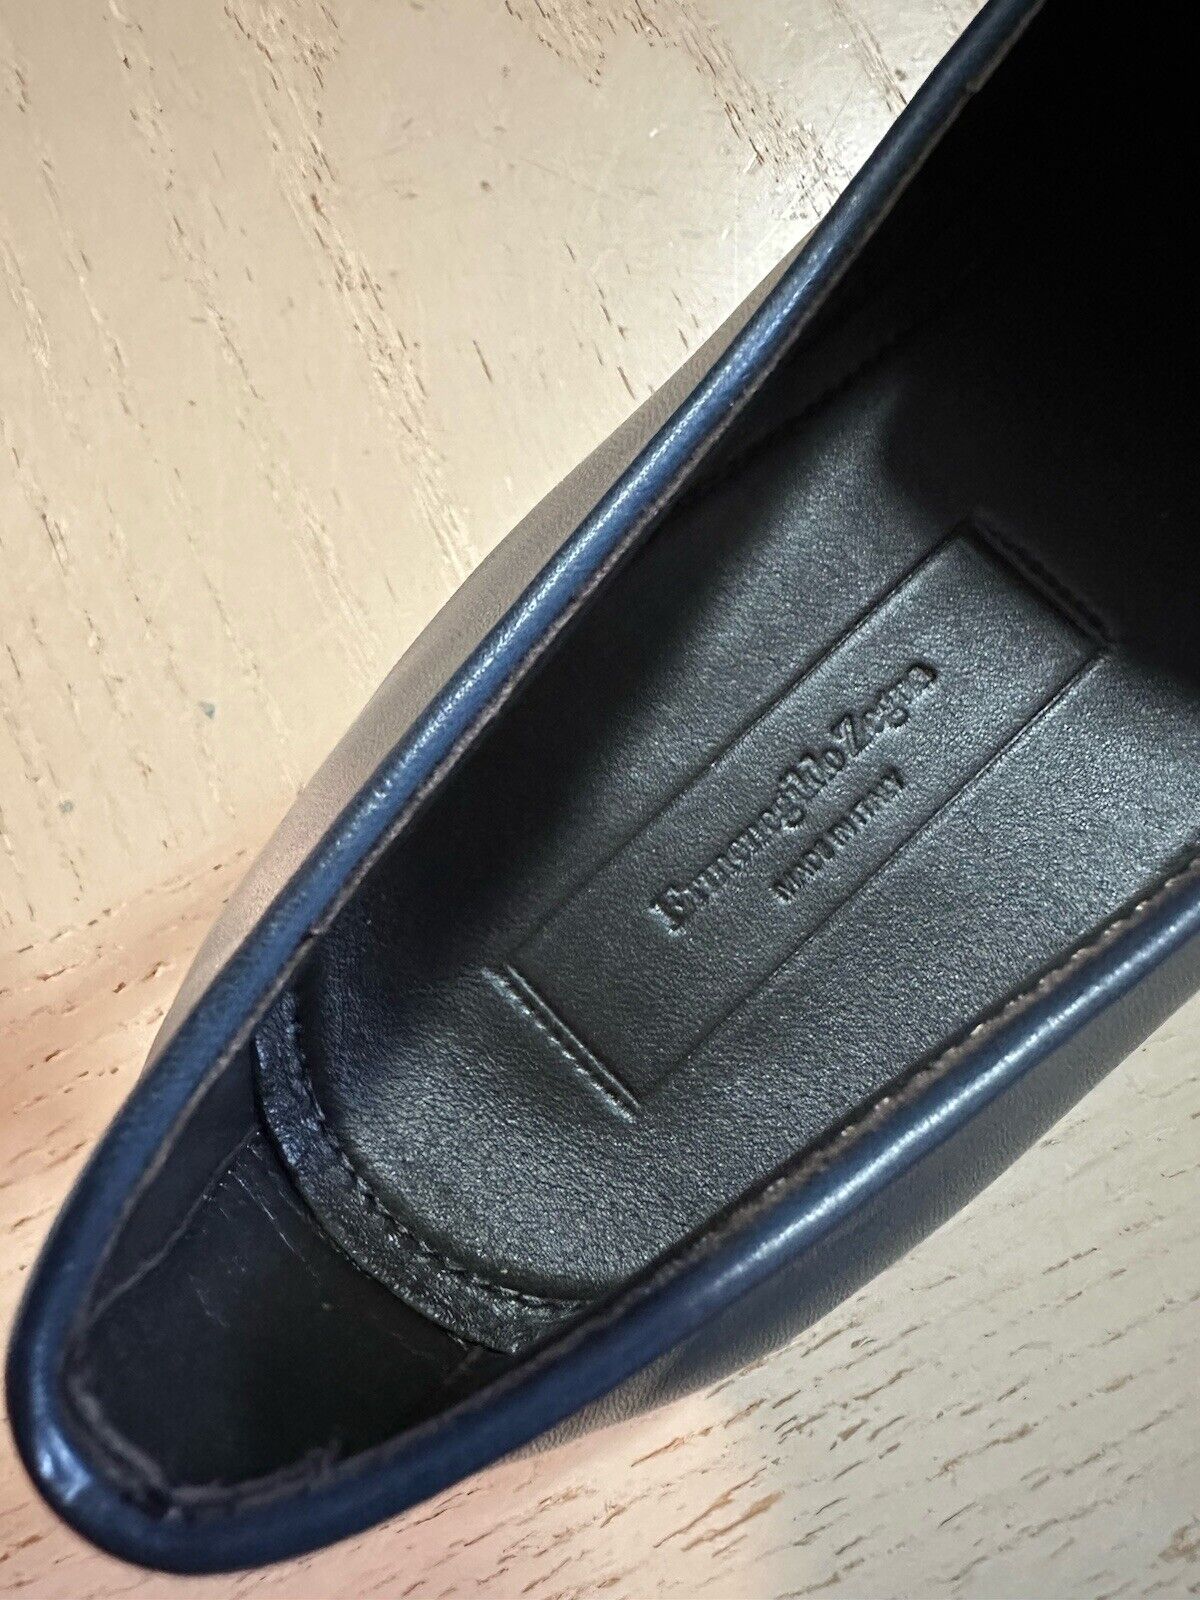 Ermenegildo Zegna Leather Reverse Construction Loafers DK Blue 10.5 US New $950